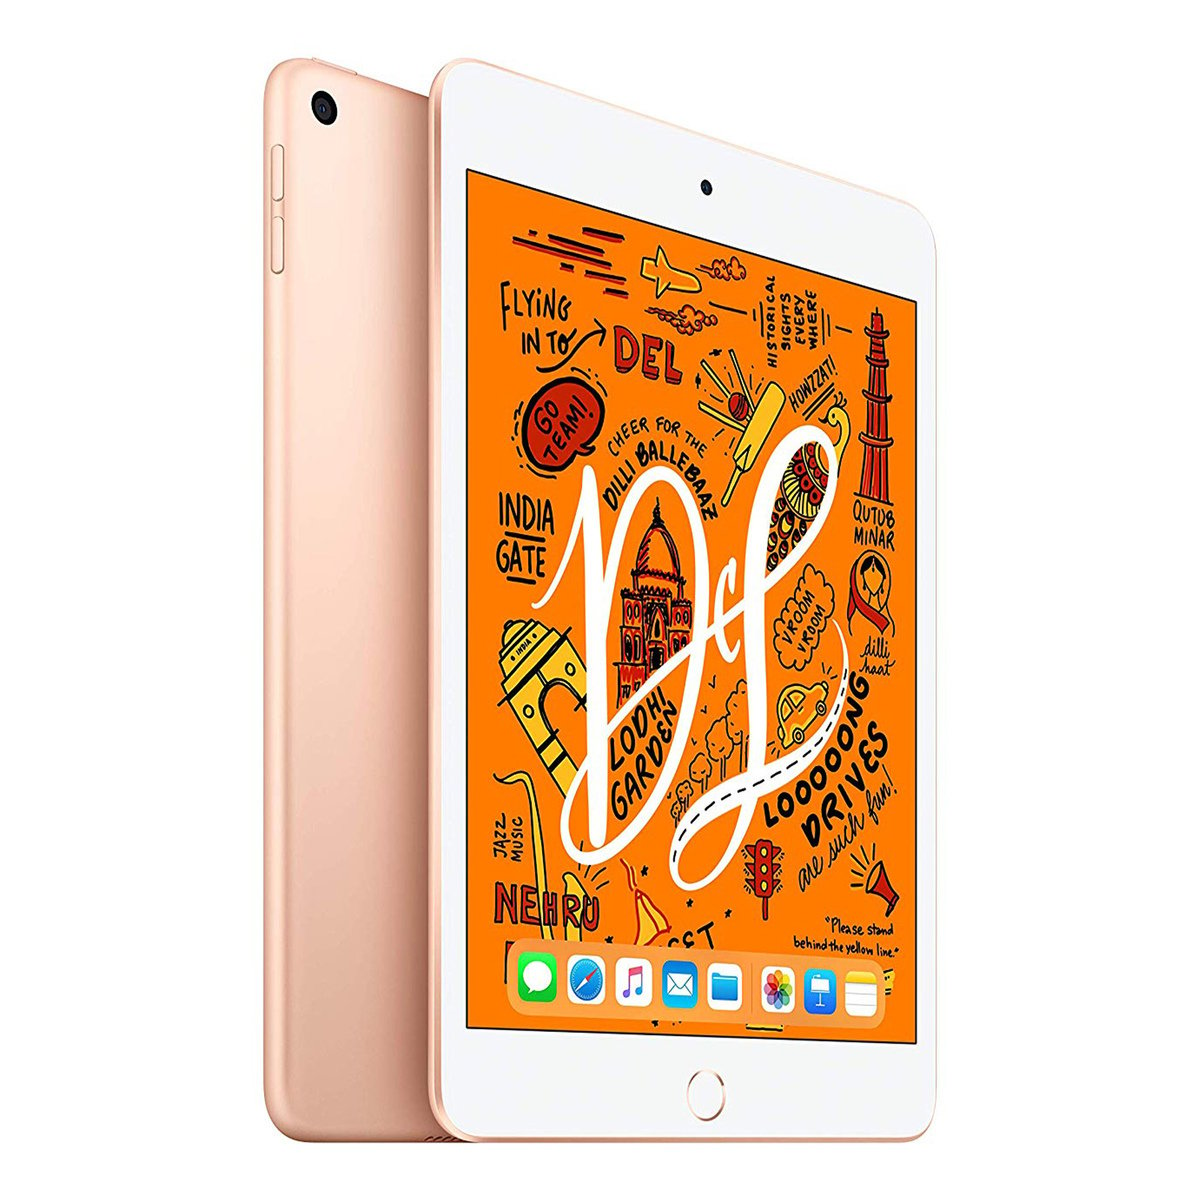 Apple iPad Mini (Wi-Fi + Cellular, 64GB) Gold